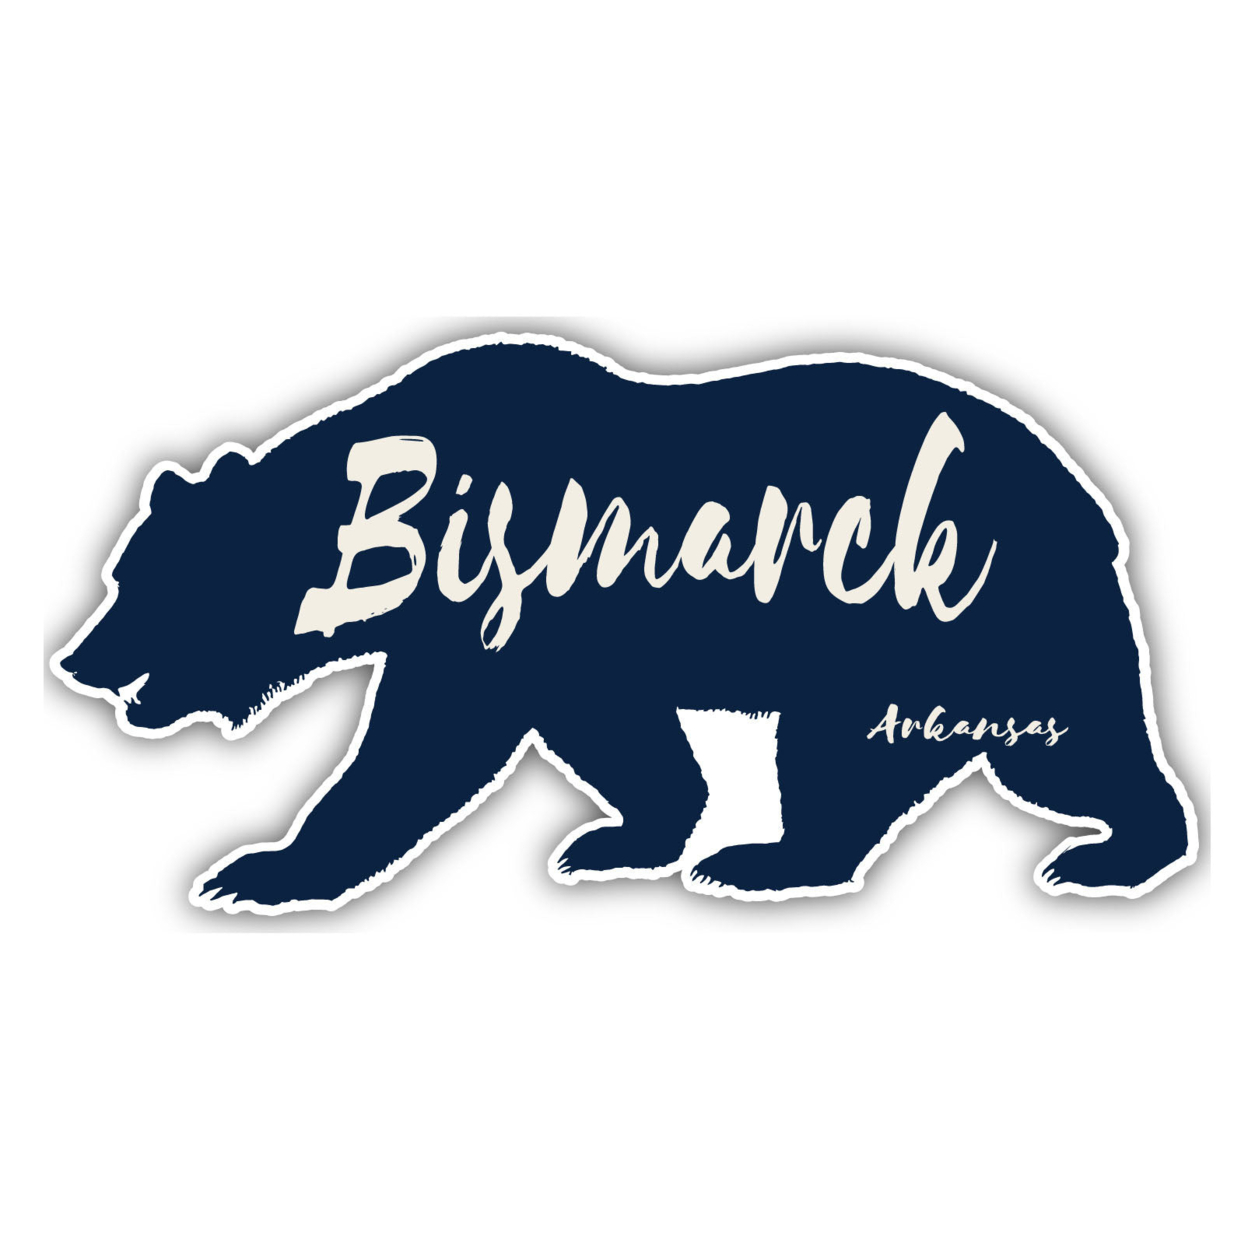 Bismarck Arkansas Souvenir Decorative Stickers (Choose Theme And Size) - 4-Pack, 10-Inch, Bear